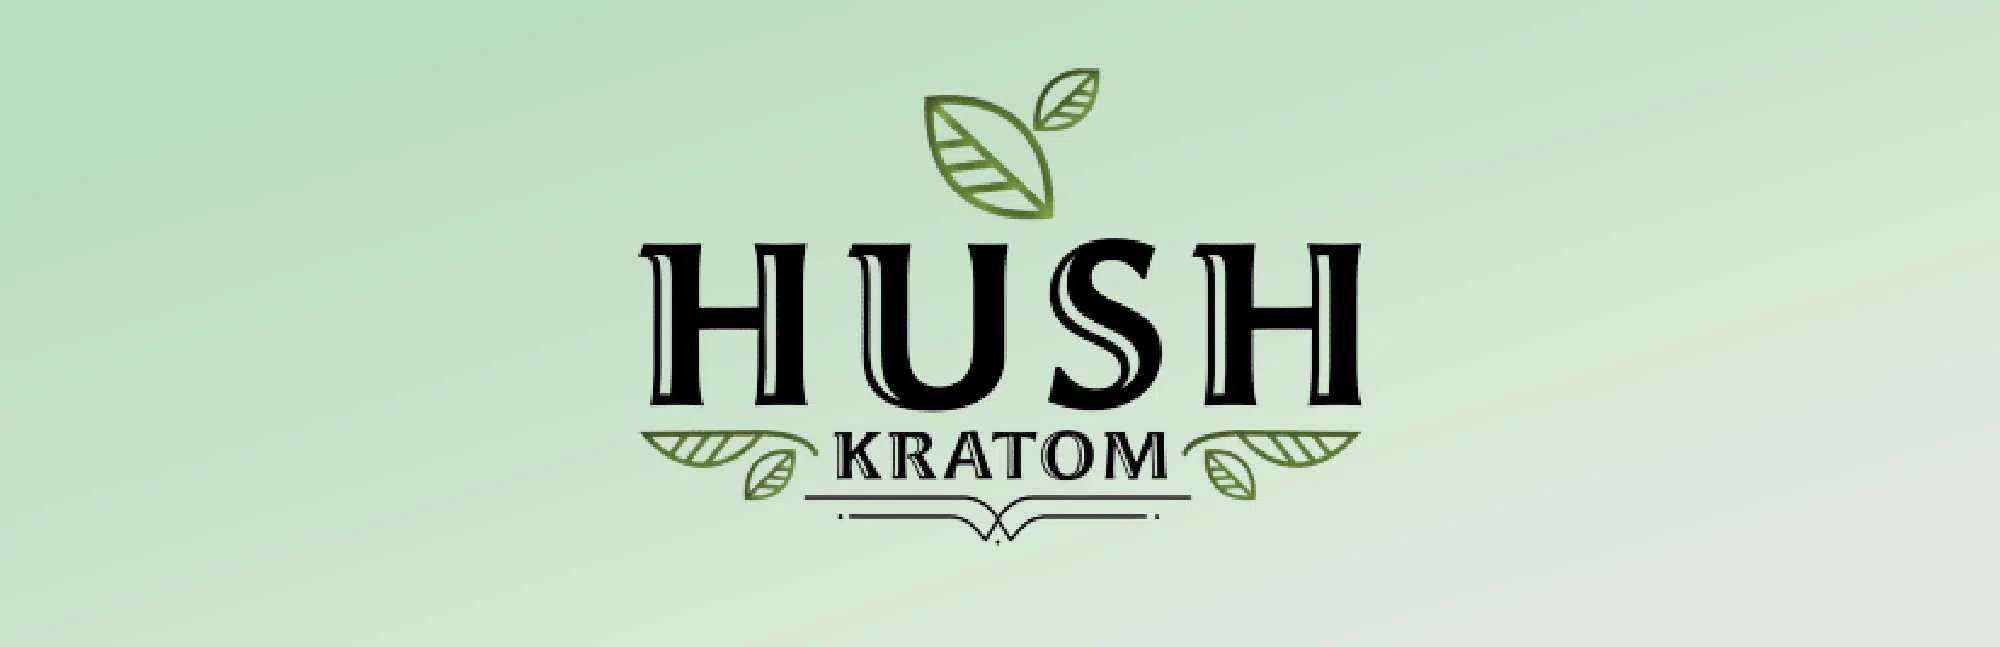 image of hush kratom logo